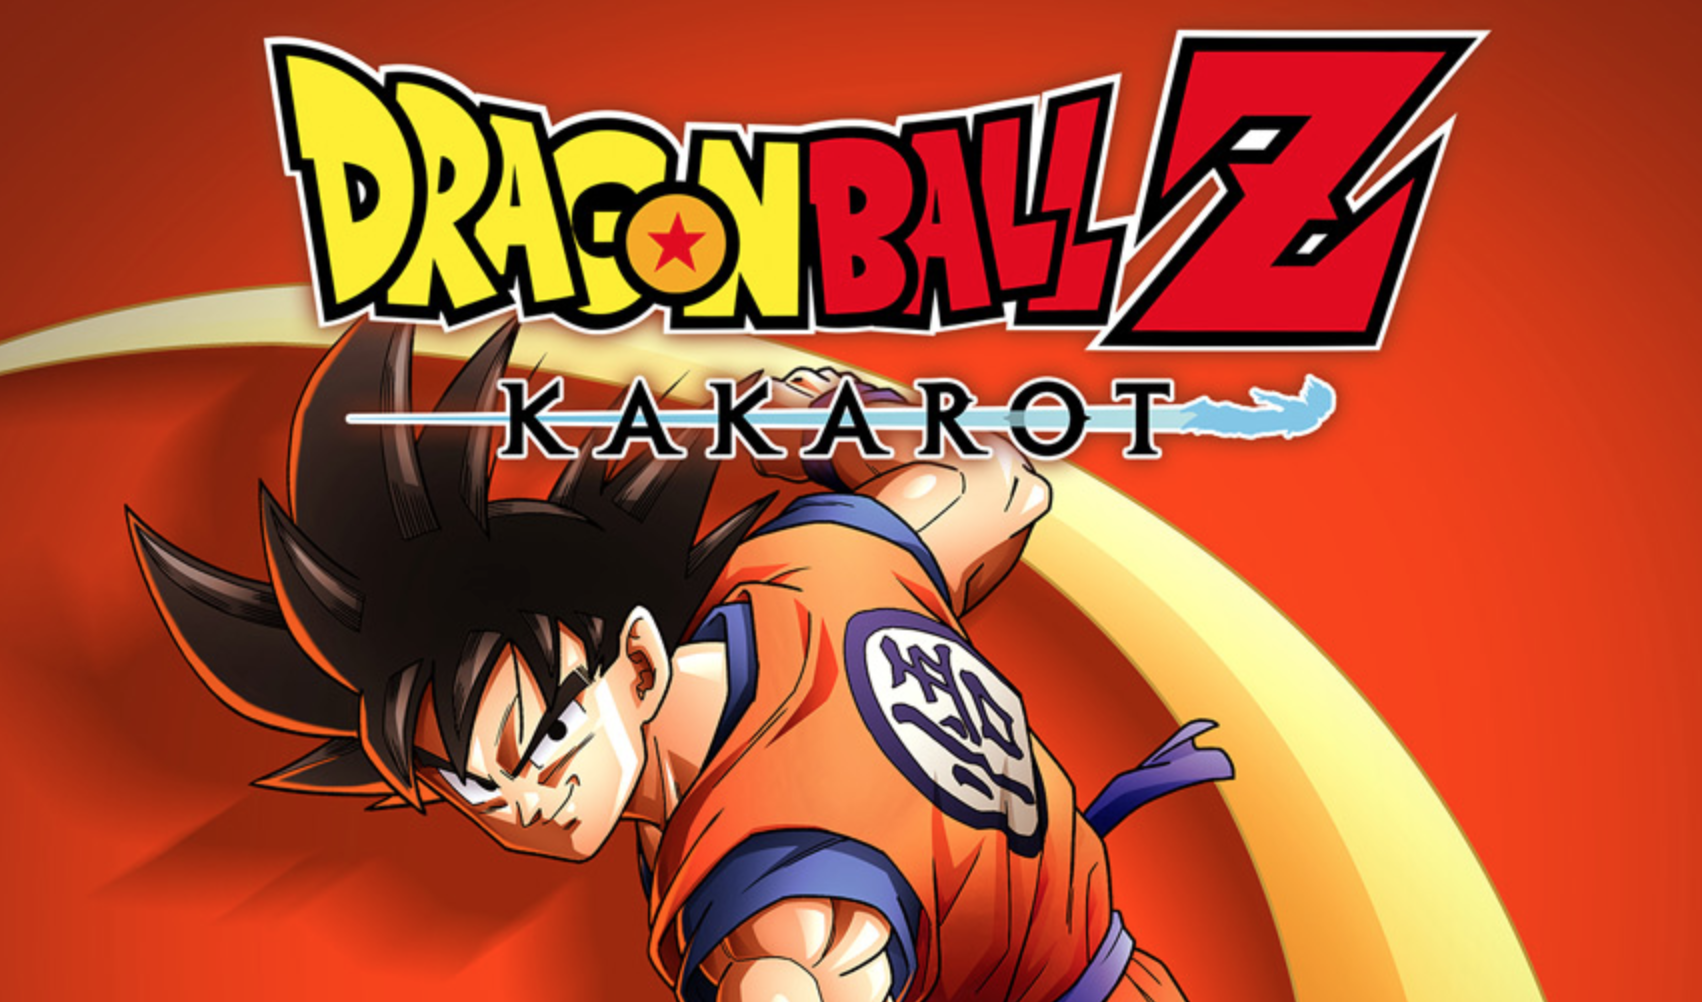 Dragon Ball Z: Kakarot เตรียมวางจำหน่ายในช่วงต้นปี 2020 พร้อมเผยชุด Collector’s Edition